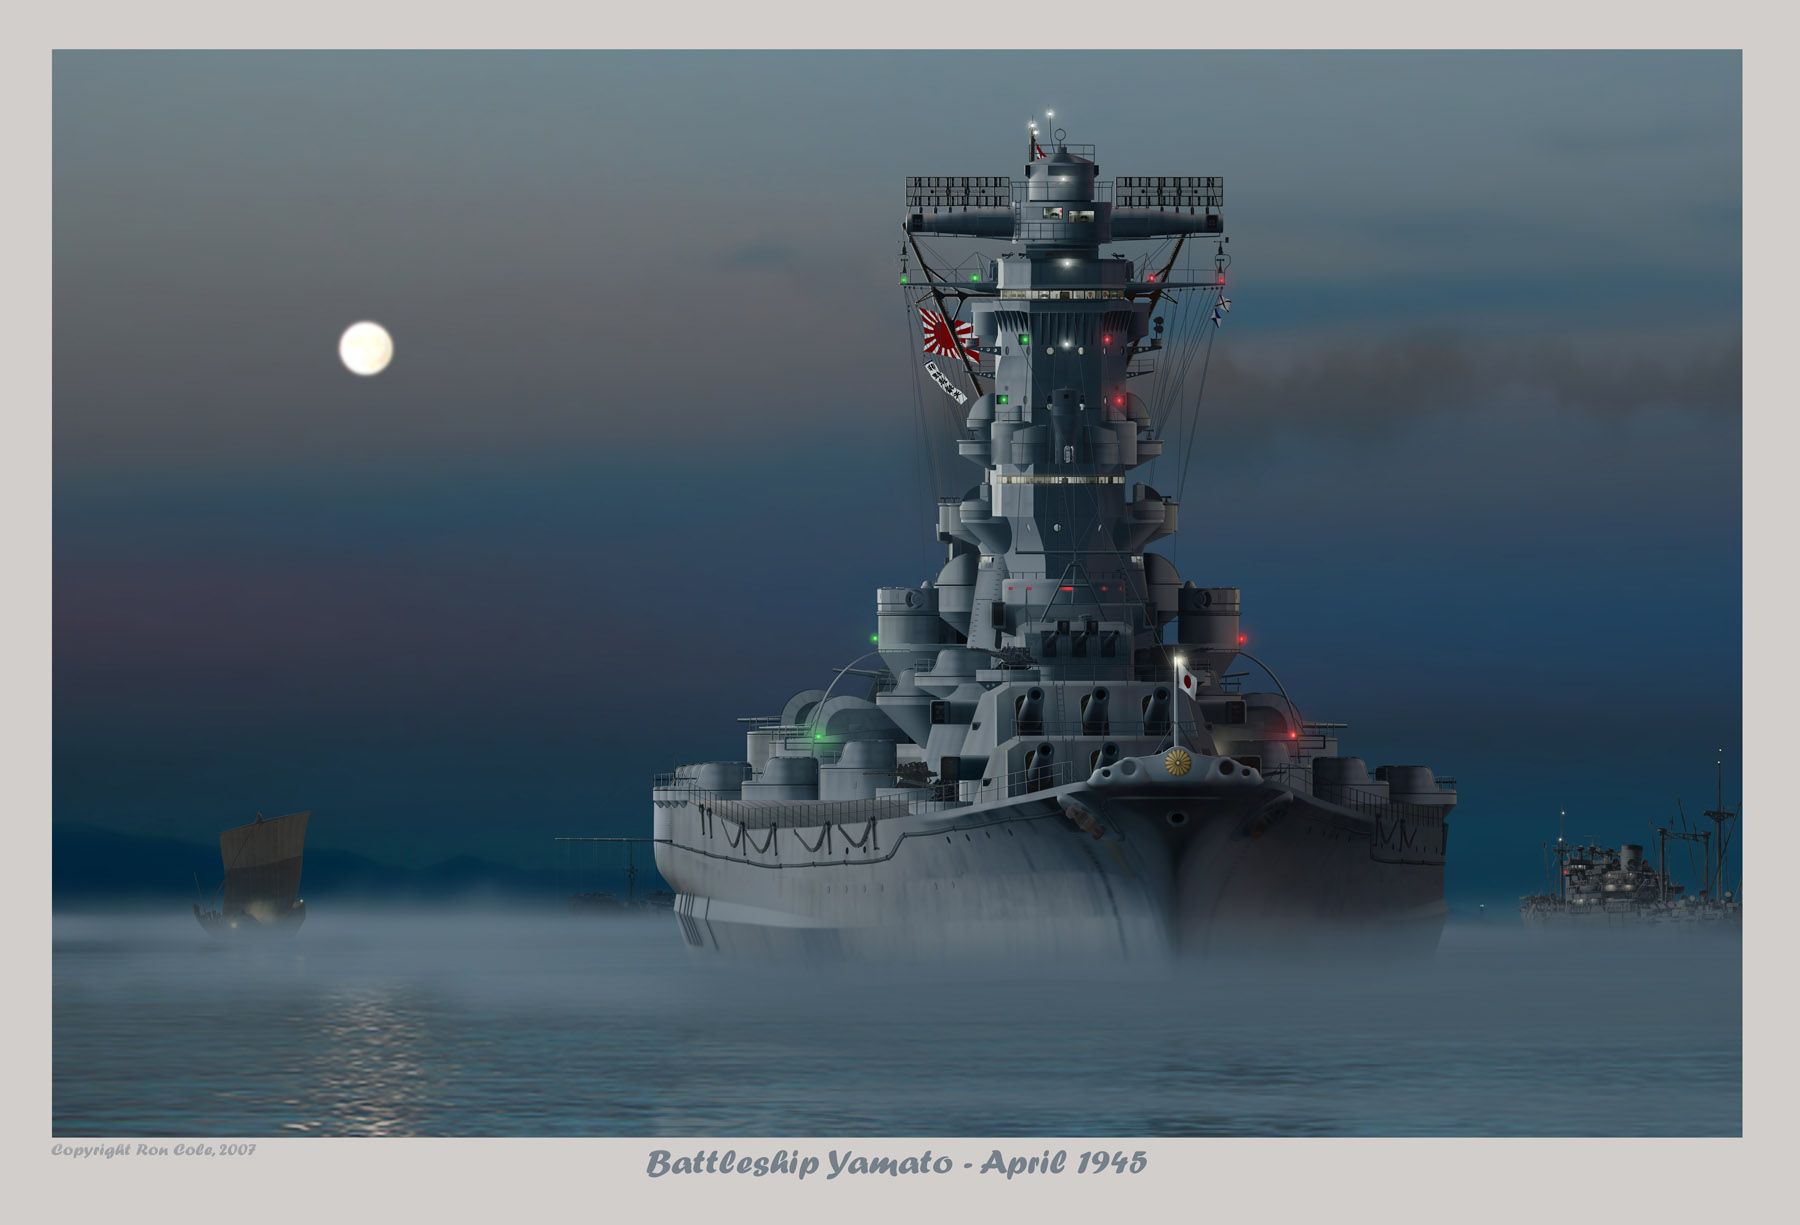 Battleship Yamato - final mission survivor autograph